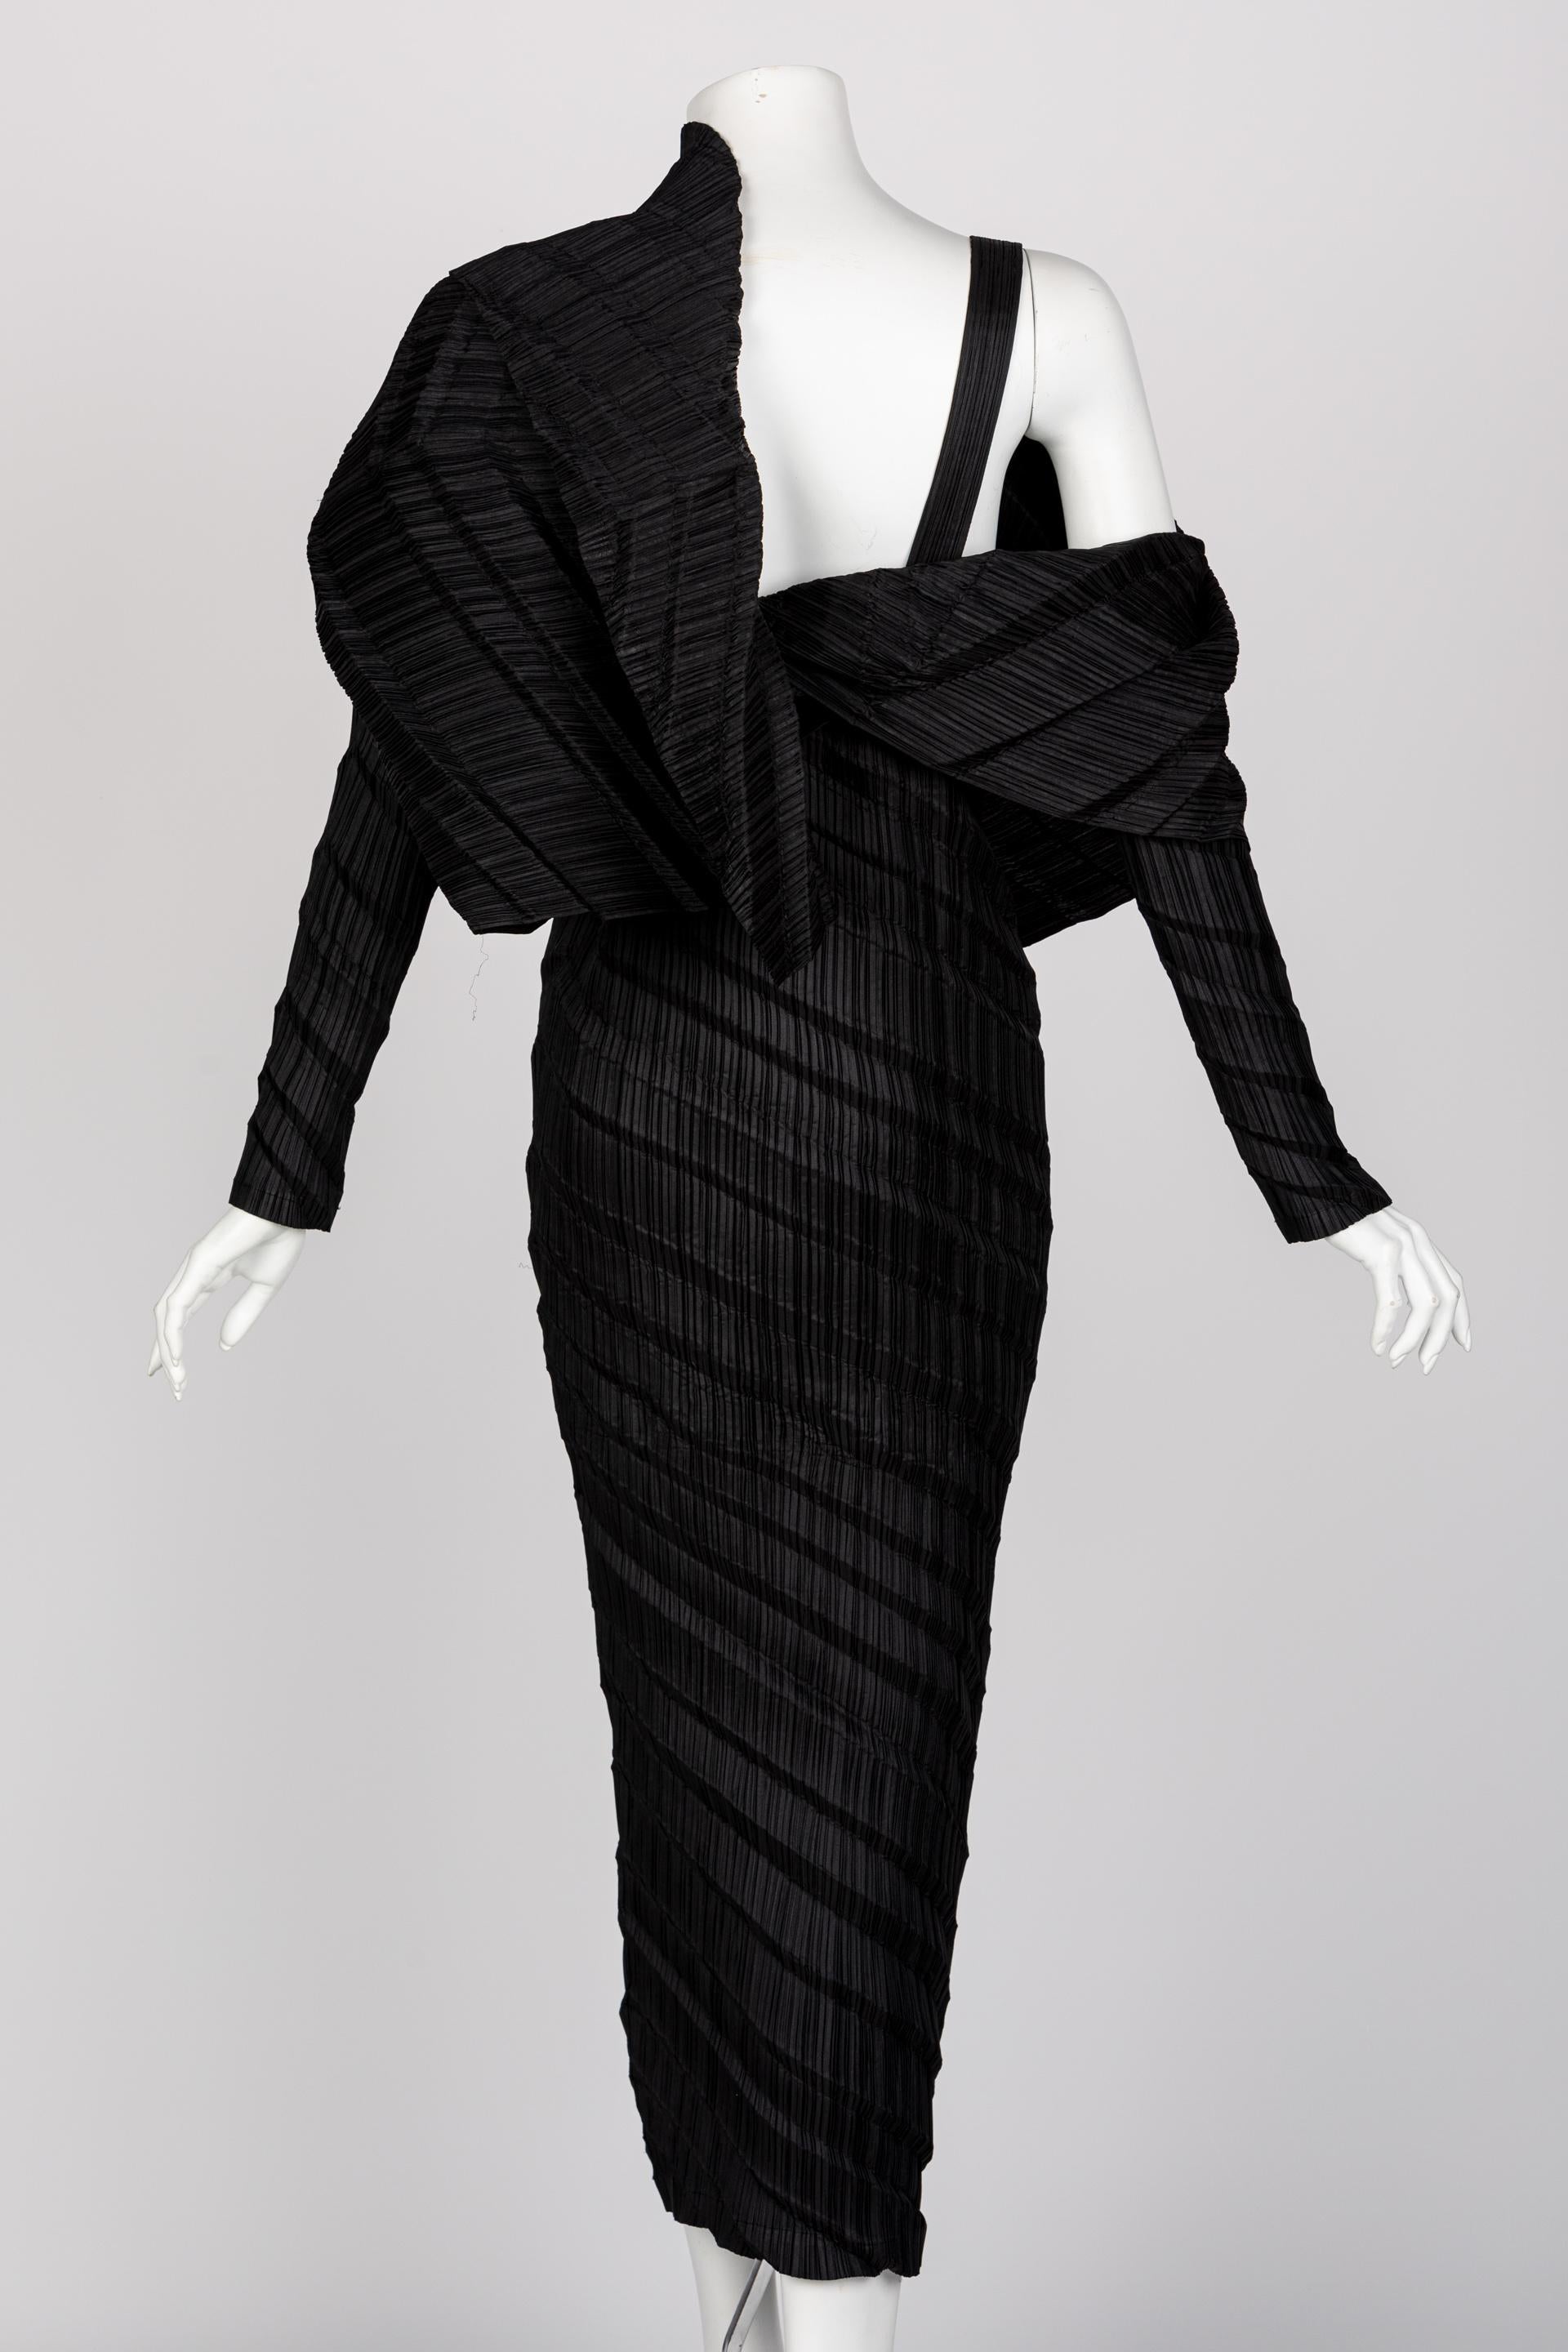 Issey Miyake Black Pleated Sculptural Dress, 1990s 1